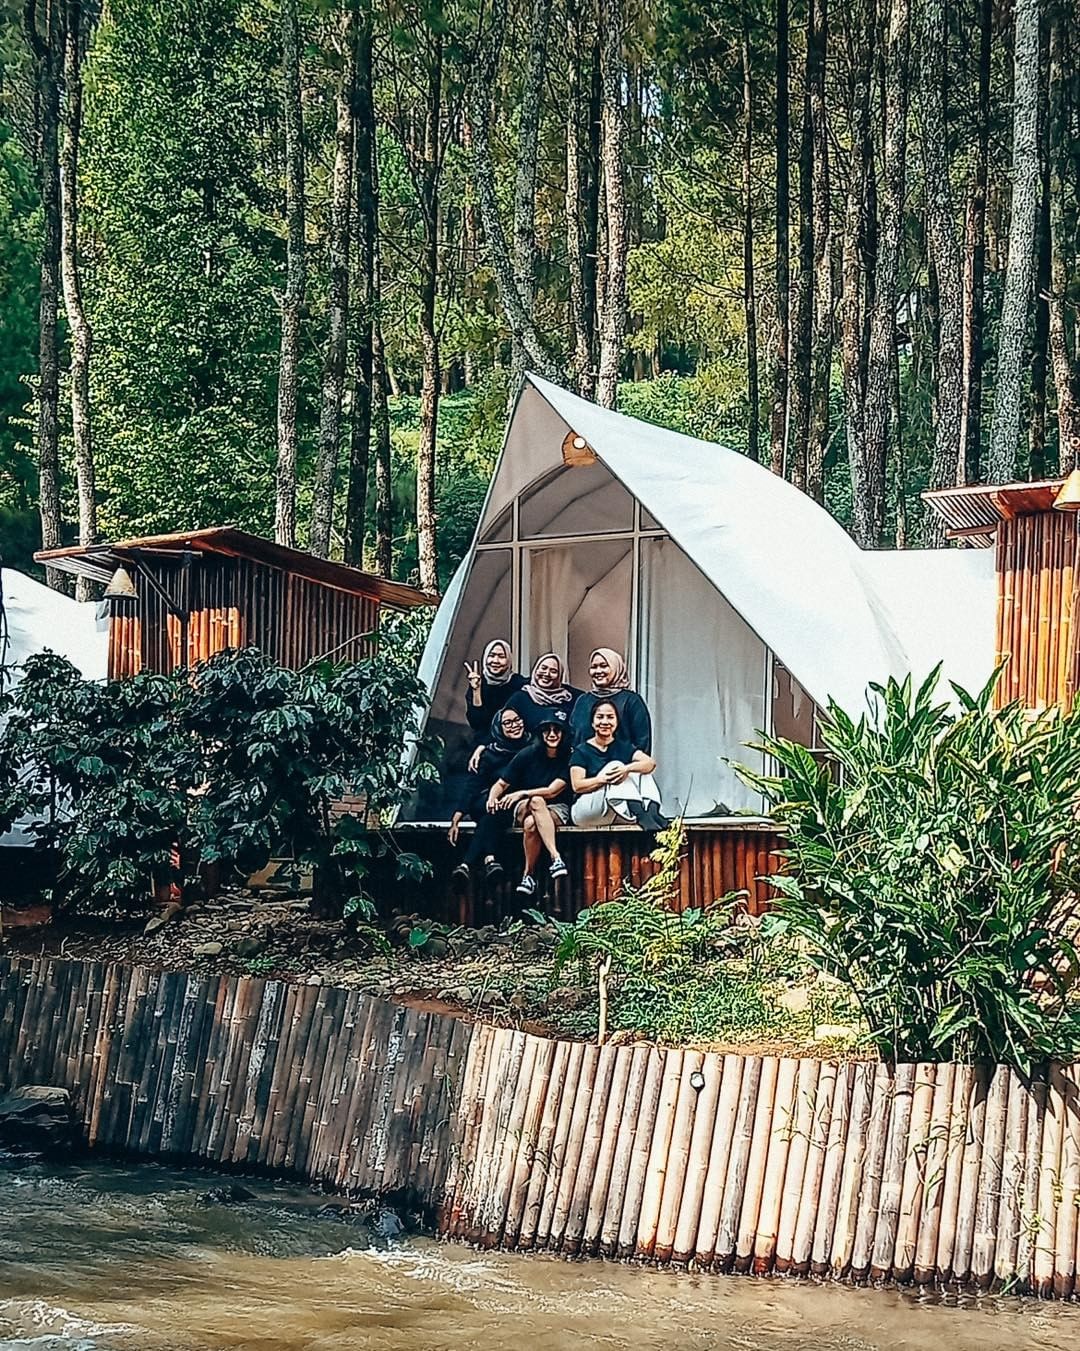 Lokasi Luxury Camp Riverside Pangalengan Image From @luxcamp Bandung